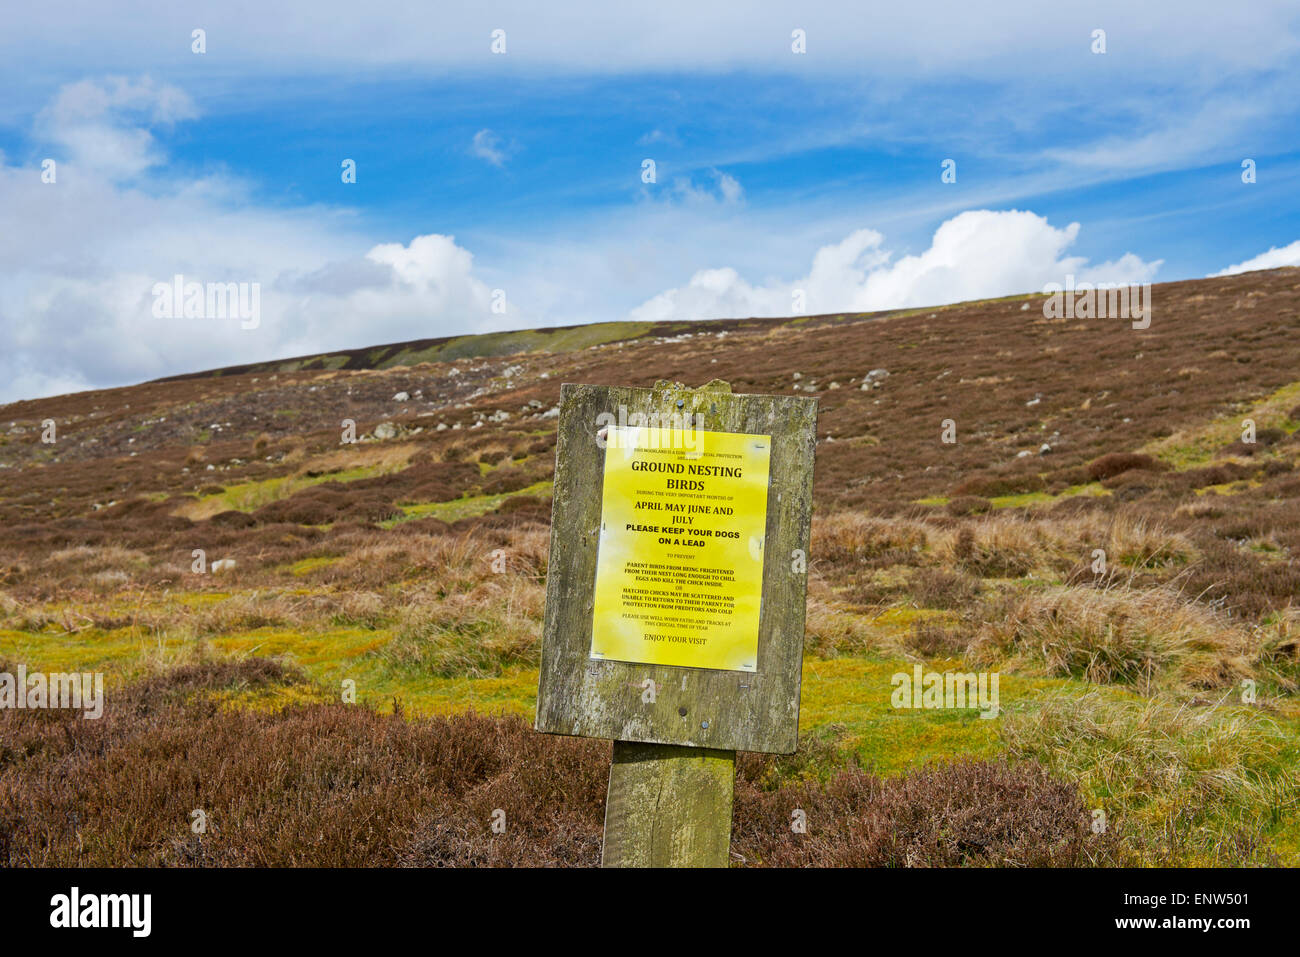 Melden Sie bittet Wanderer nicht zu stören Boden brütende Vögel, Swaledale, Yorkshire Dales National Park, North Yorkshire, England UK Stockfoto